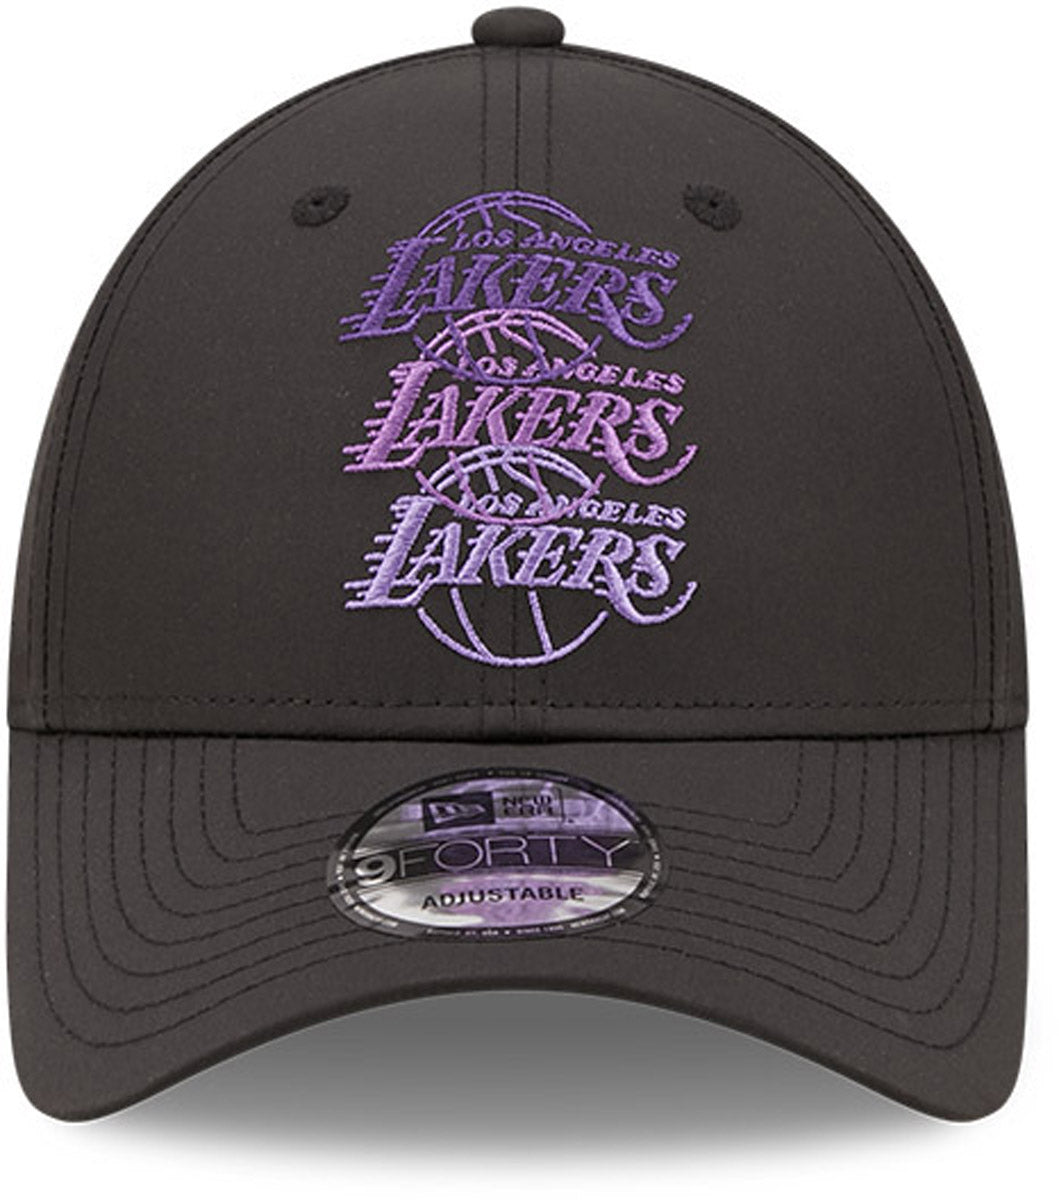 New Era NBA LA Lakers adjustable trucker cap in black